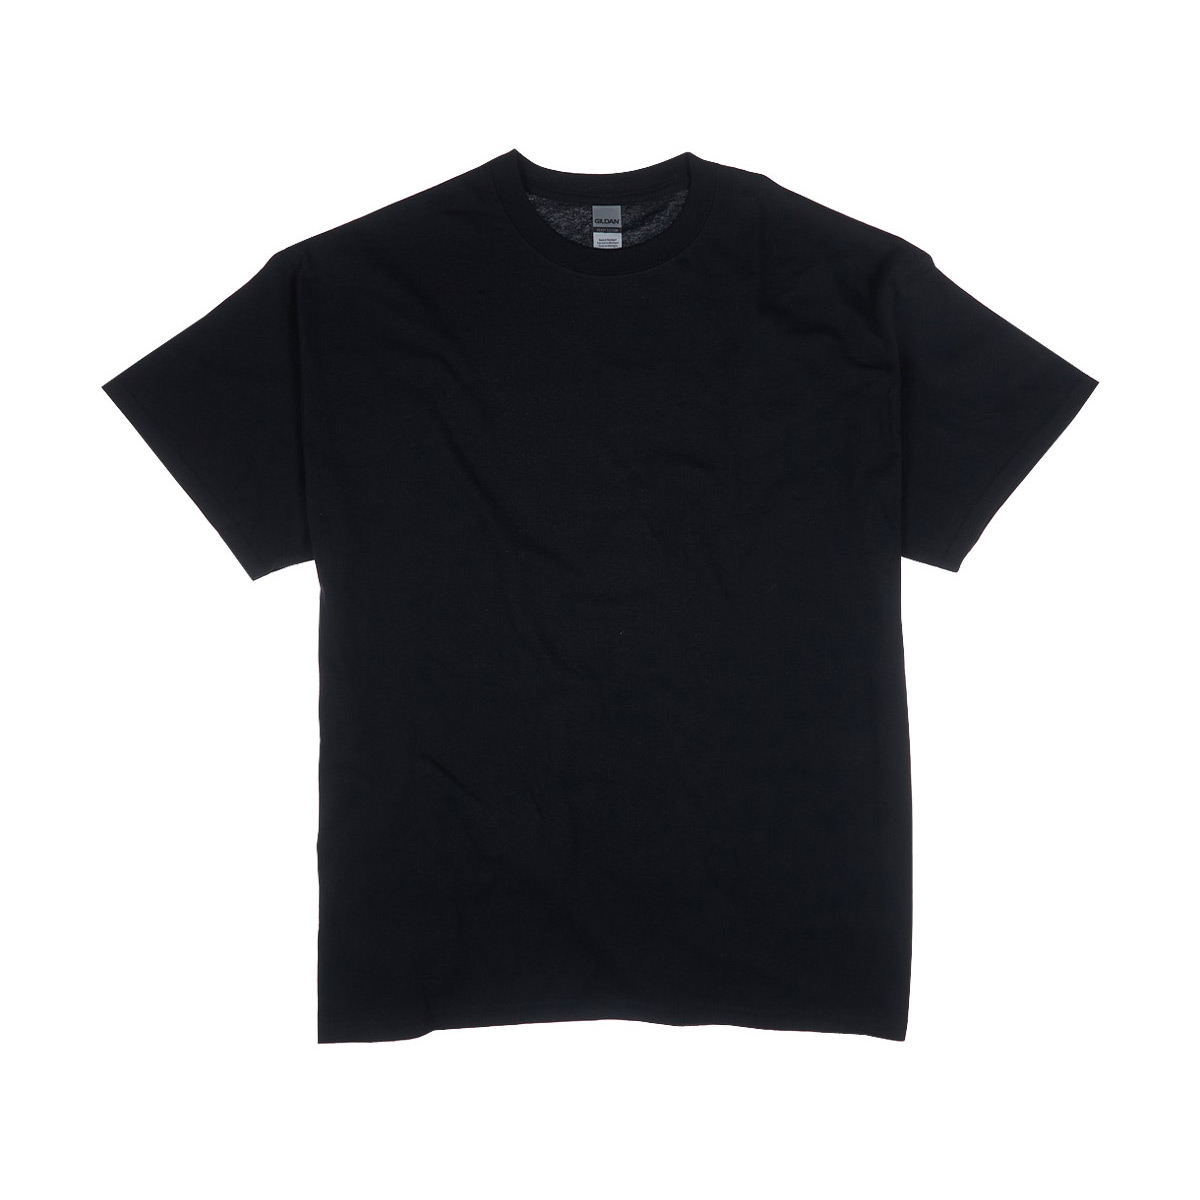 Gildan Solid Black Cotton T-Shirt, Extra Large